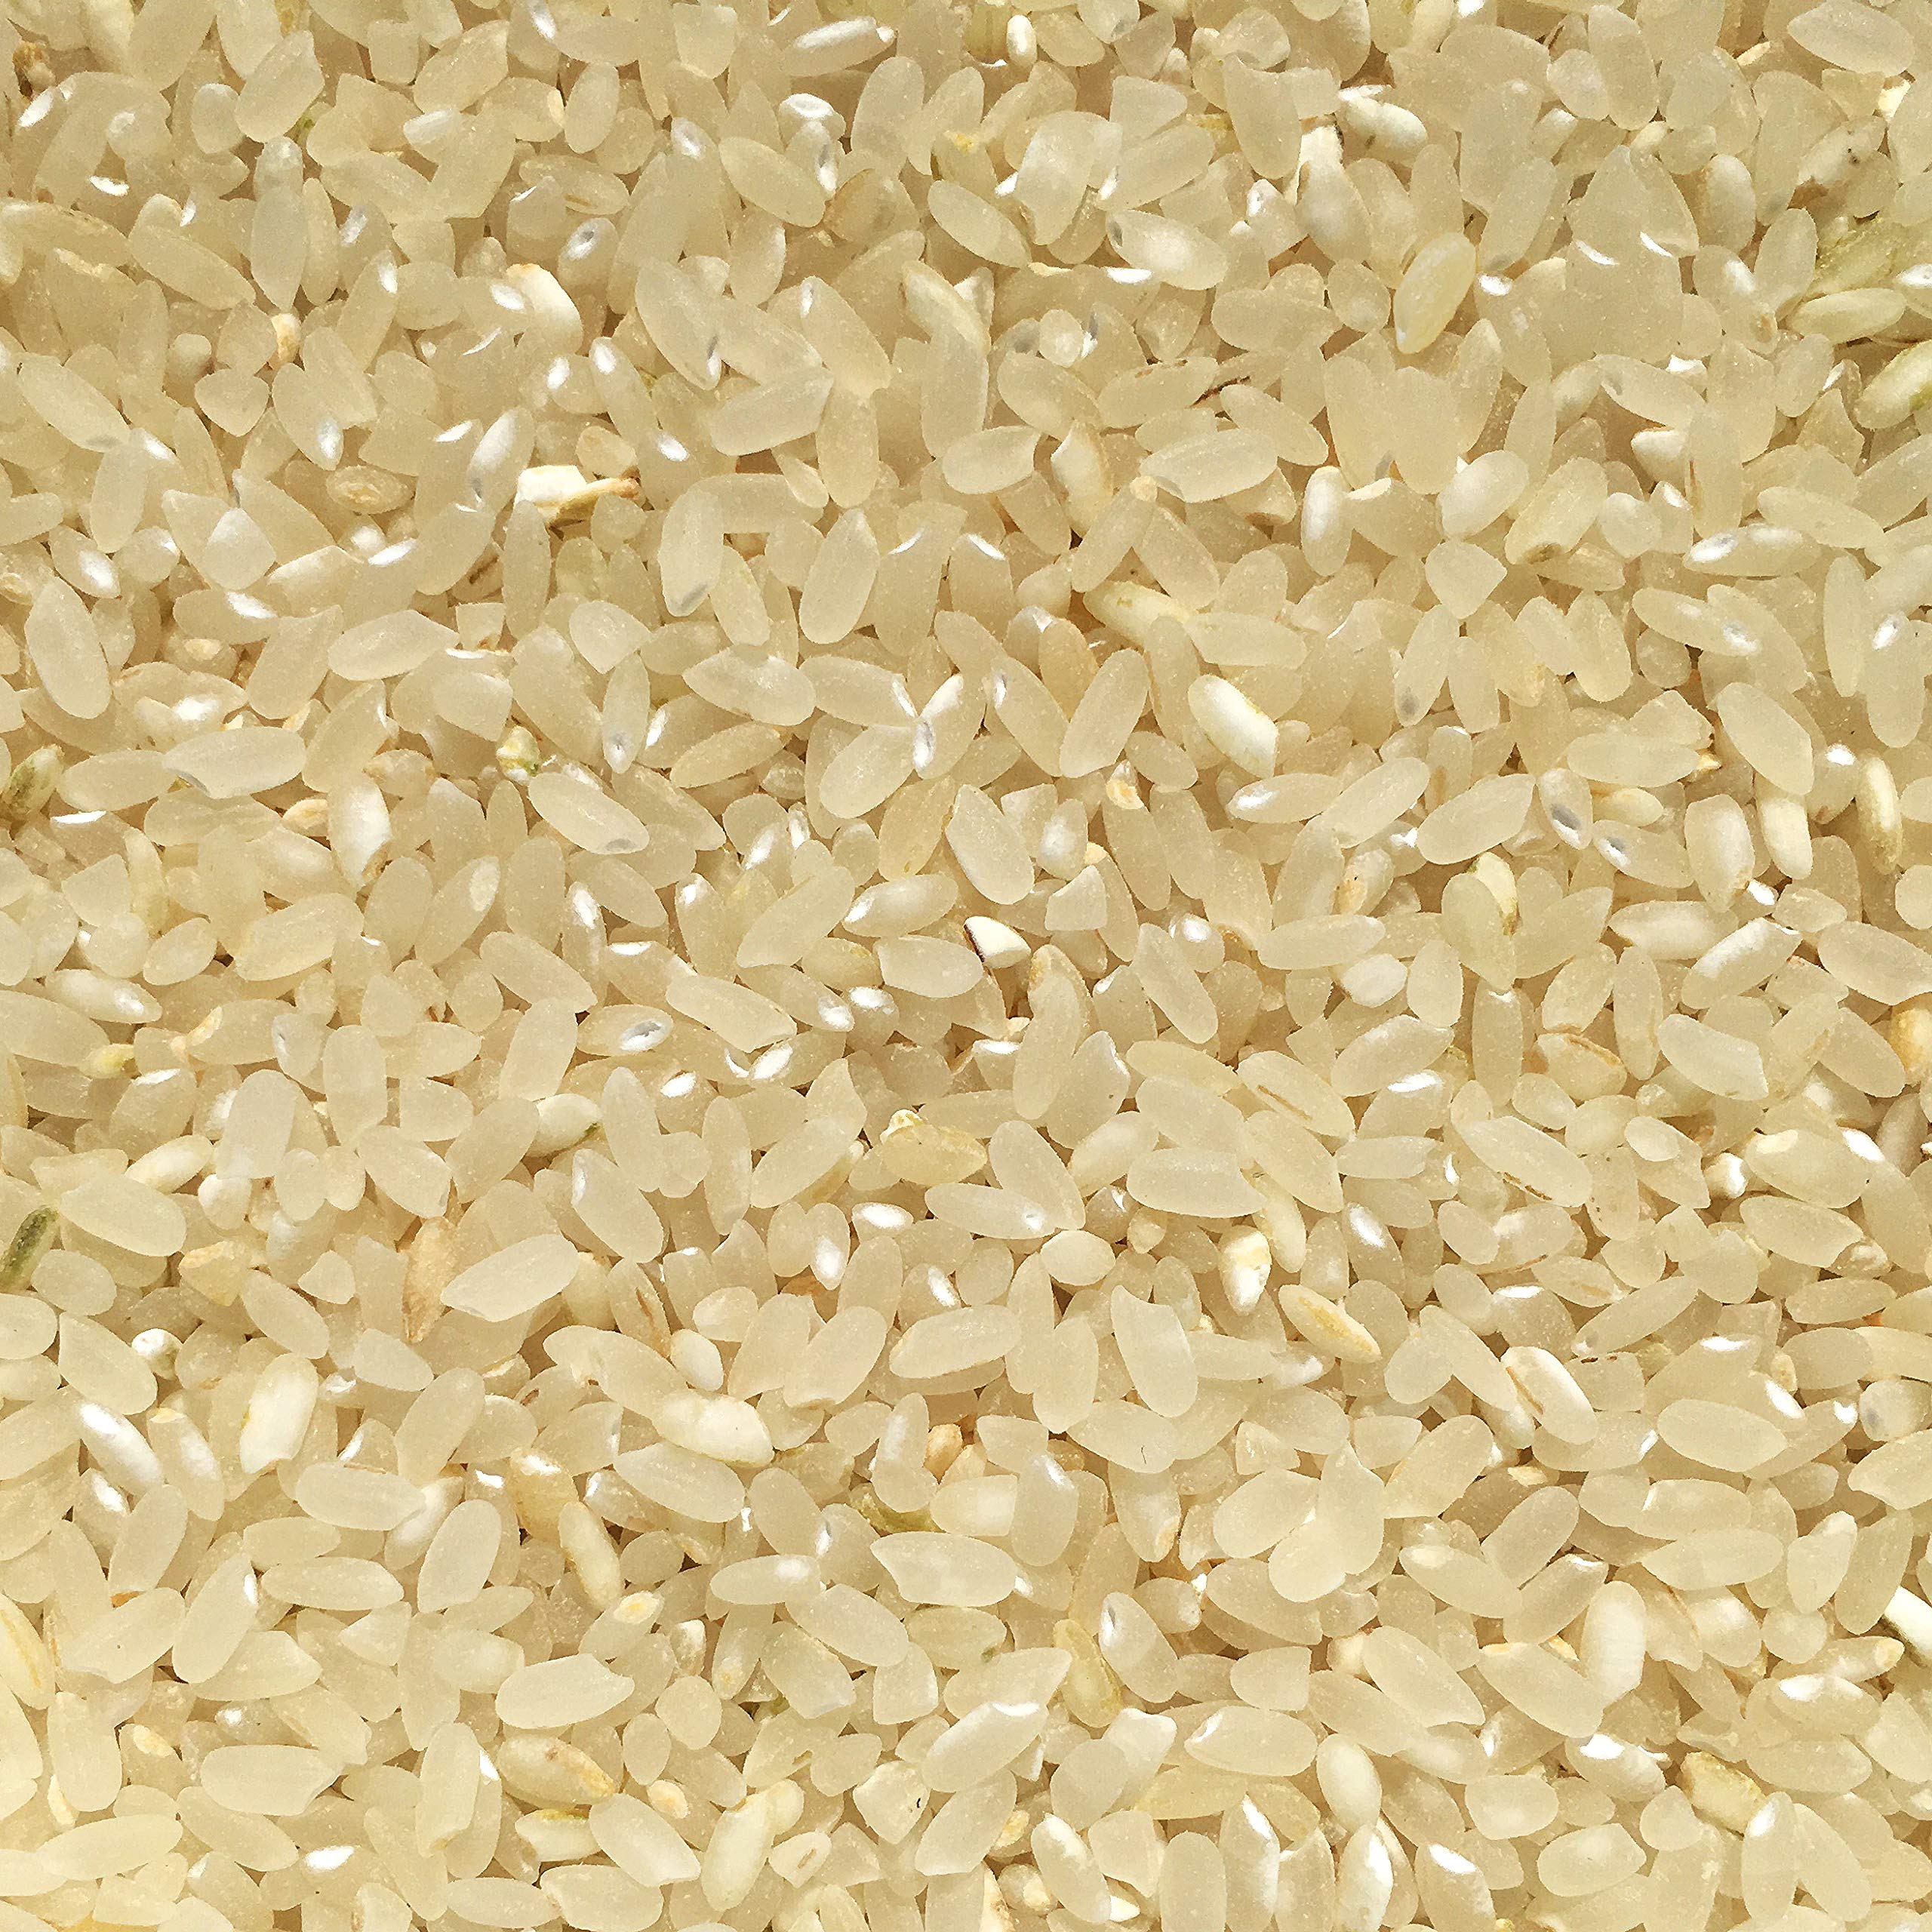 Chico Rice - 20 lbs Blonde California Japonica Medium Grain Rice - 100% Organic, Vegan, Gluten Free, Haiga Mai